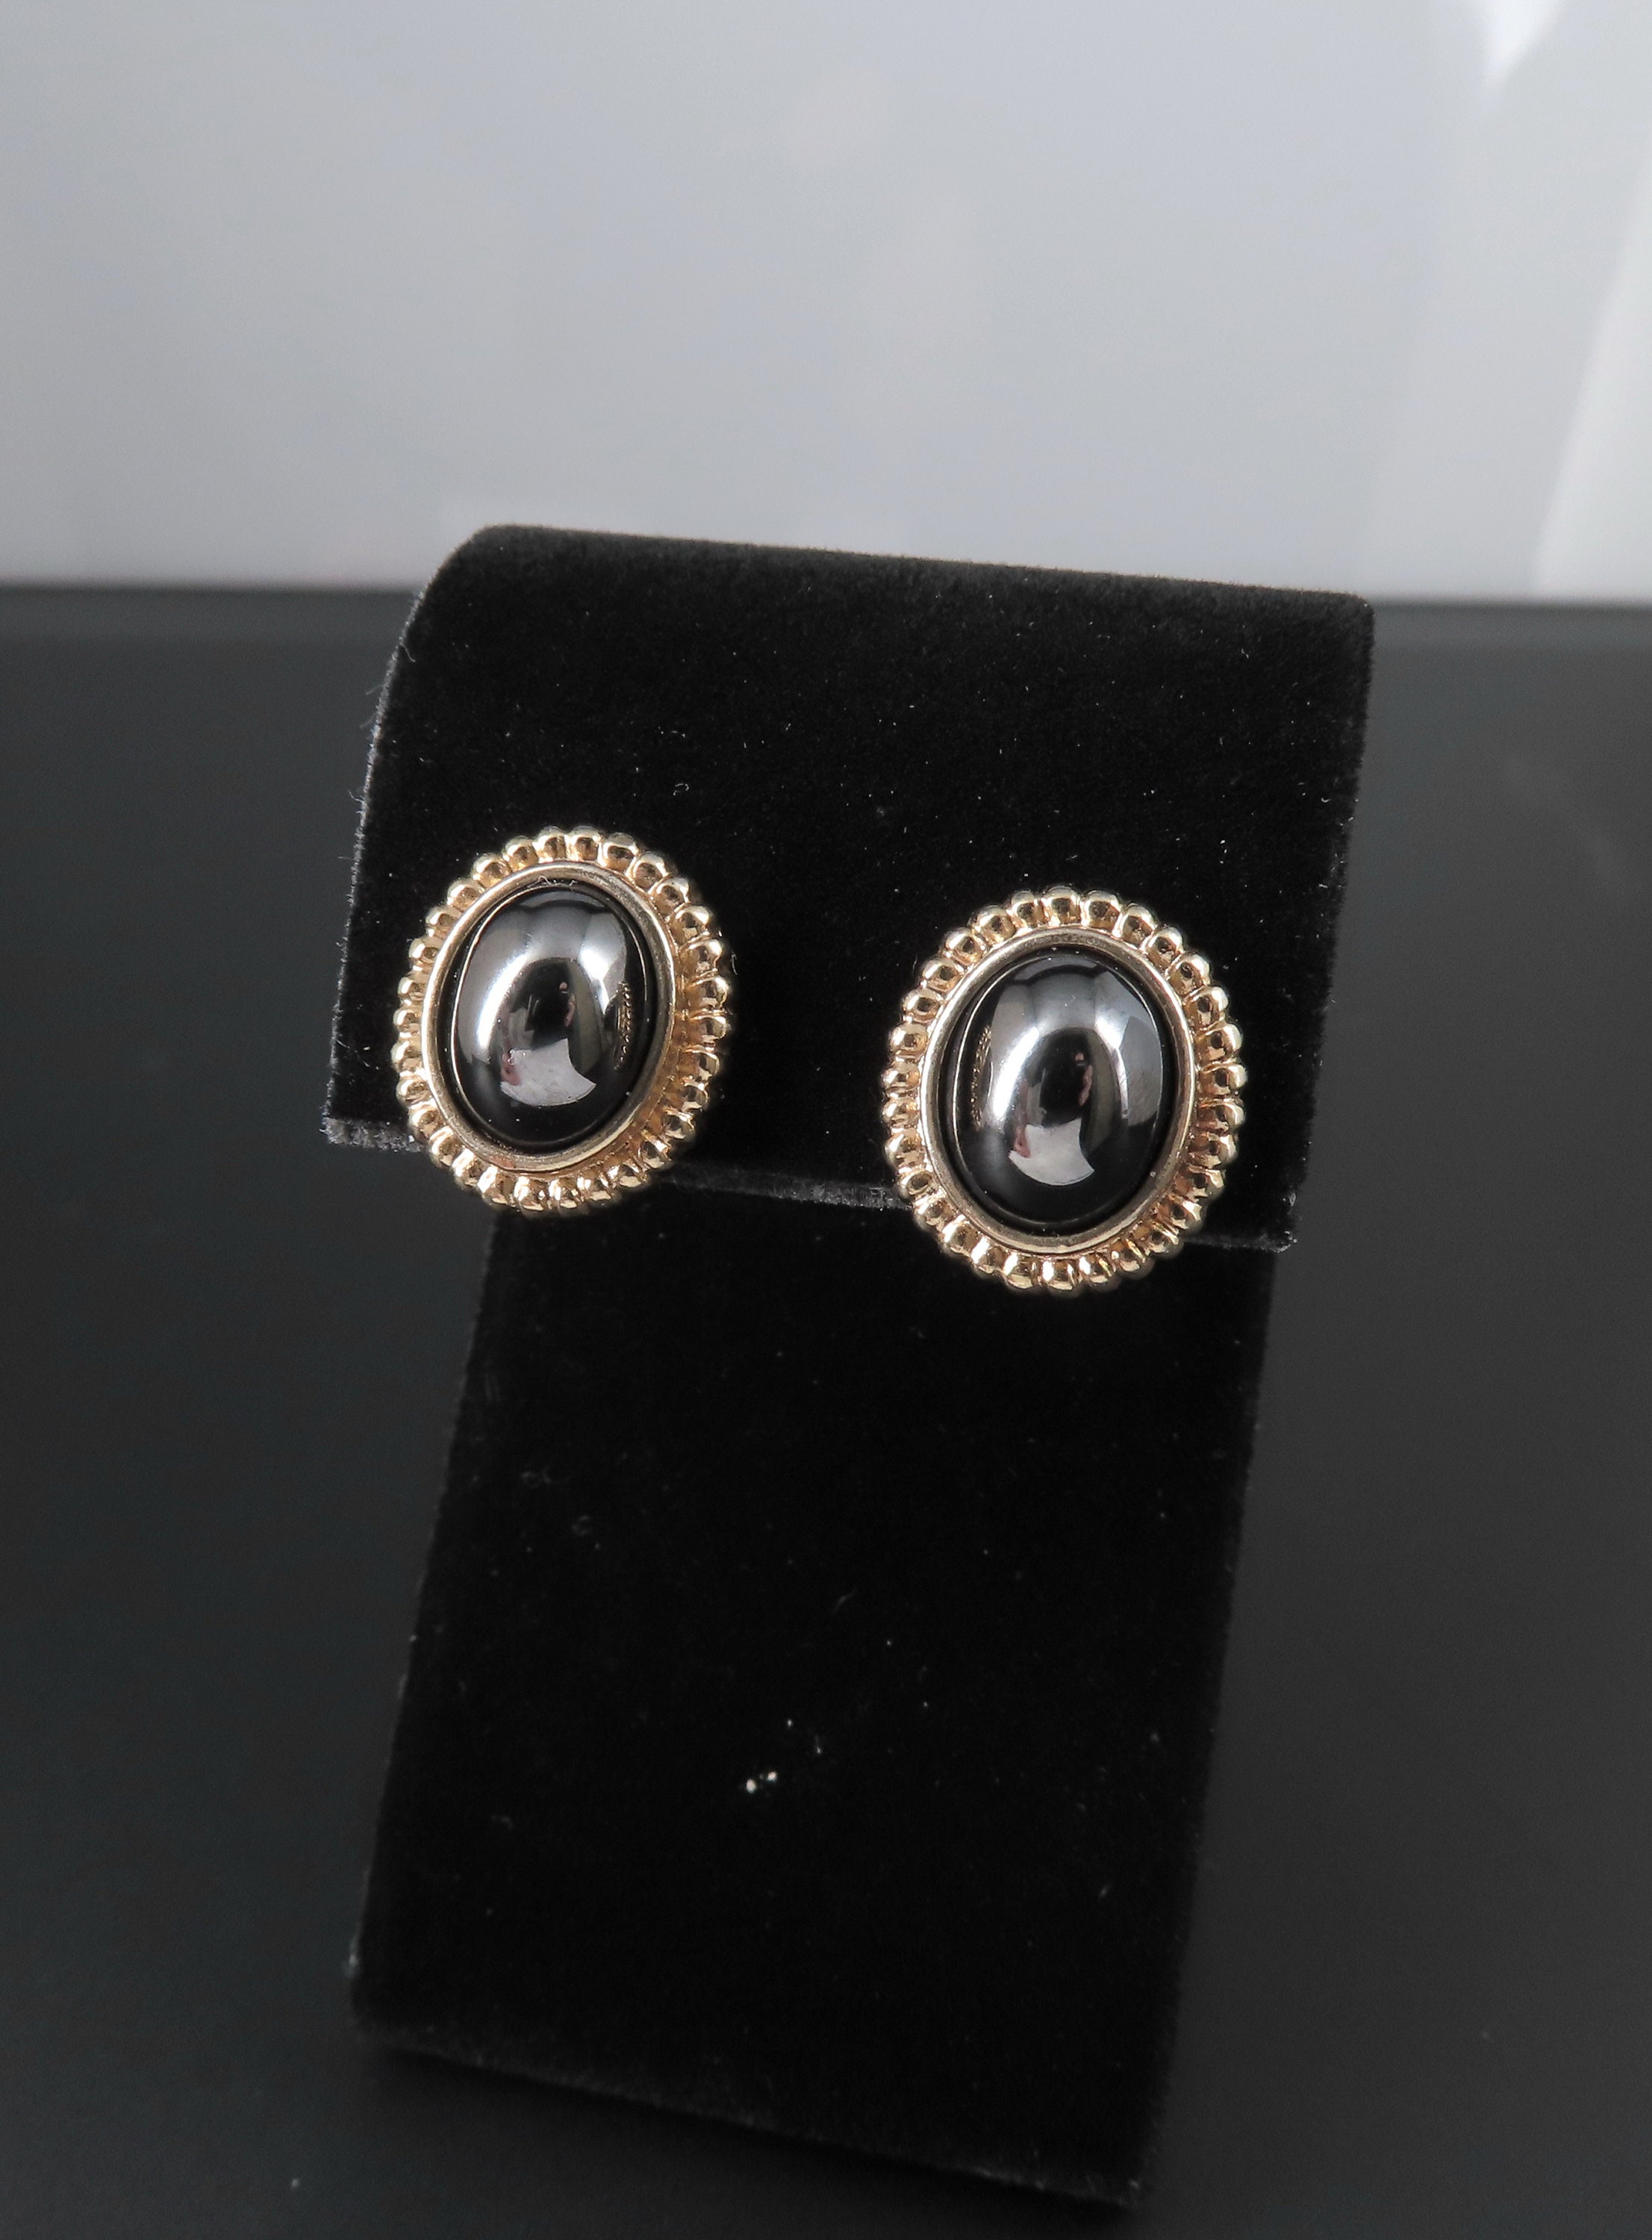 Vintage Louis Feraud Hematite Pierced Earrings Original Box